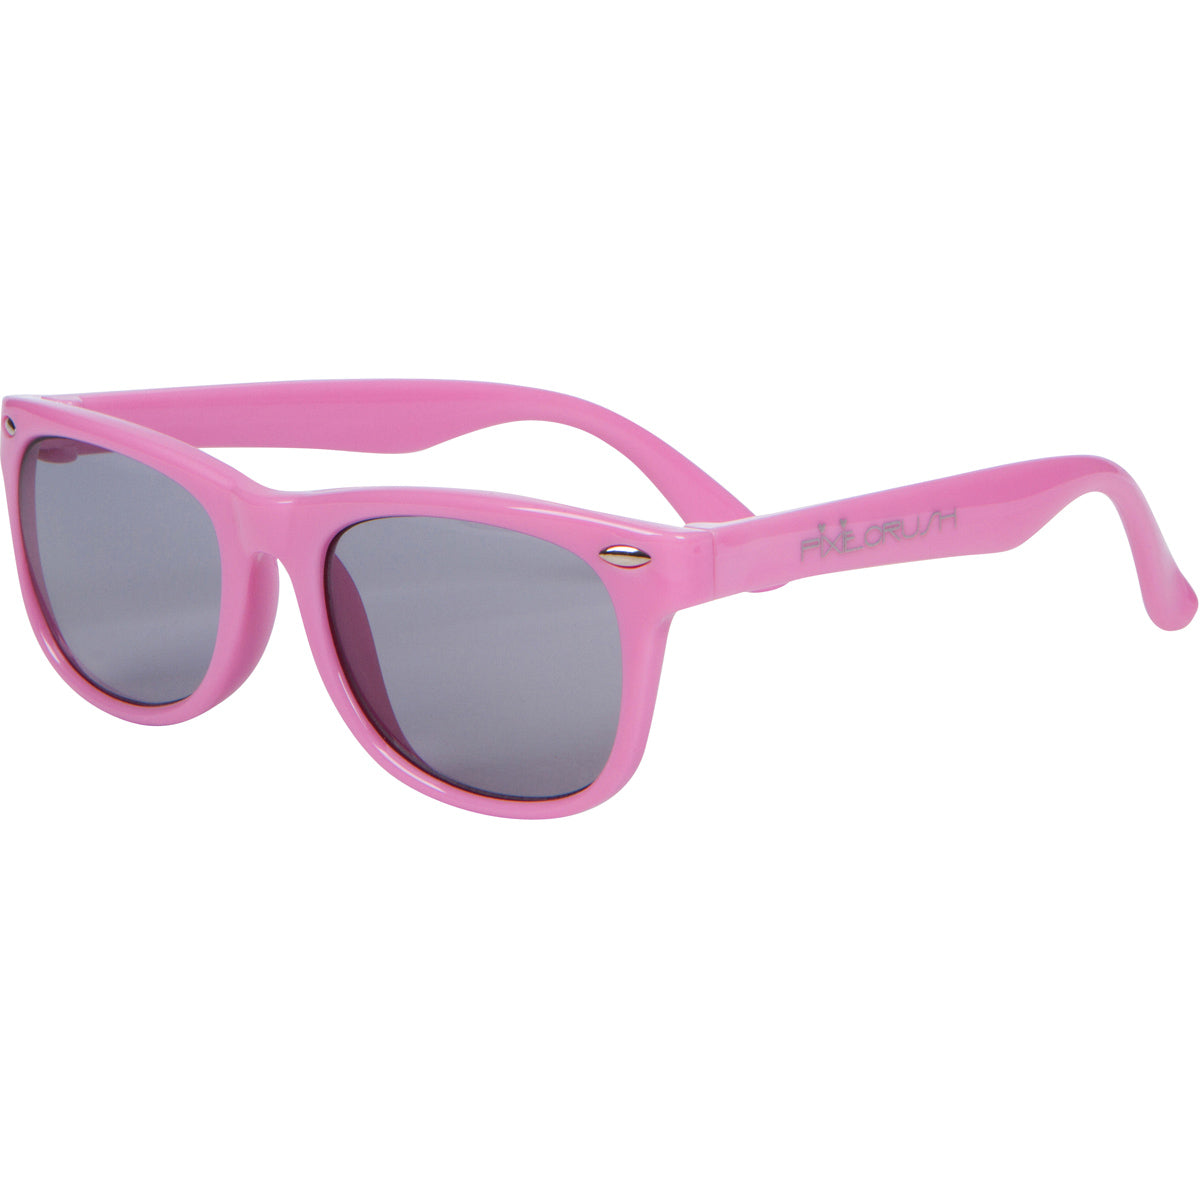 Wayfarer Style - Pixie Crush Pink